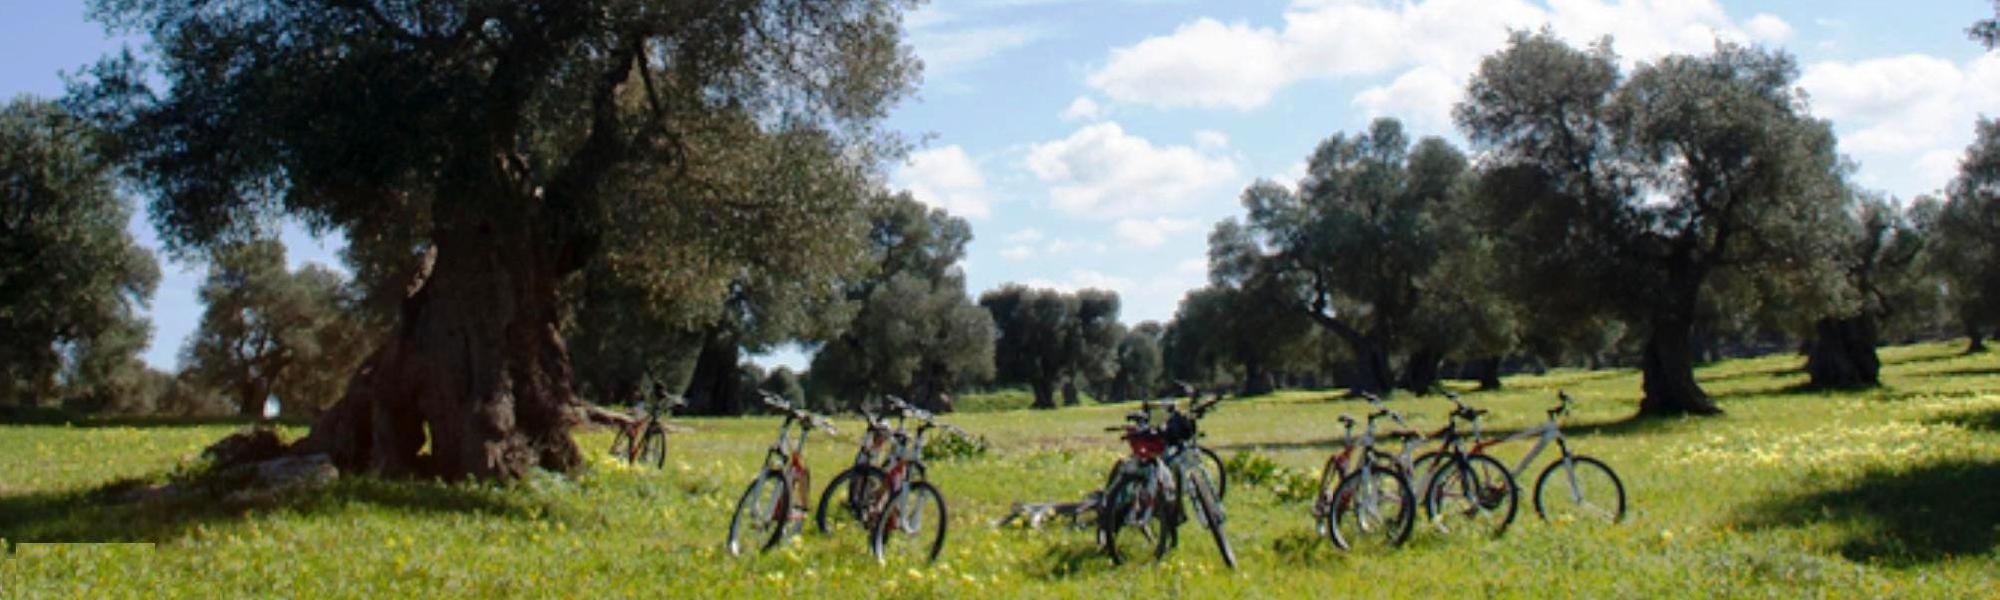 Apulien Bike - Radtour in der Natur des Agritourismus Puglia, Ostuni 0